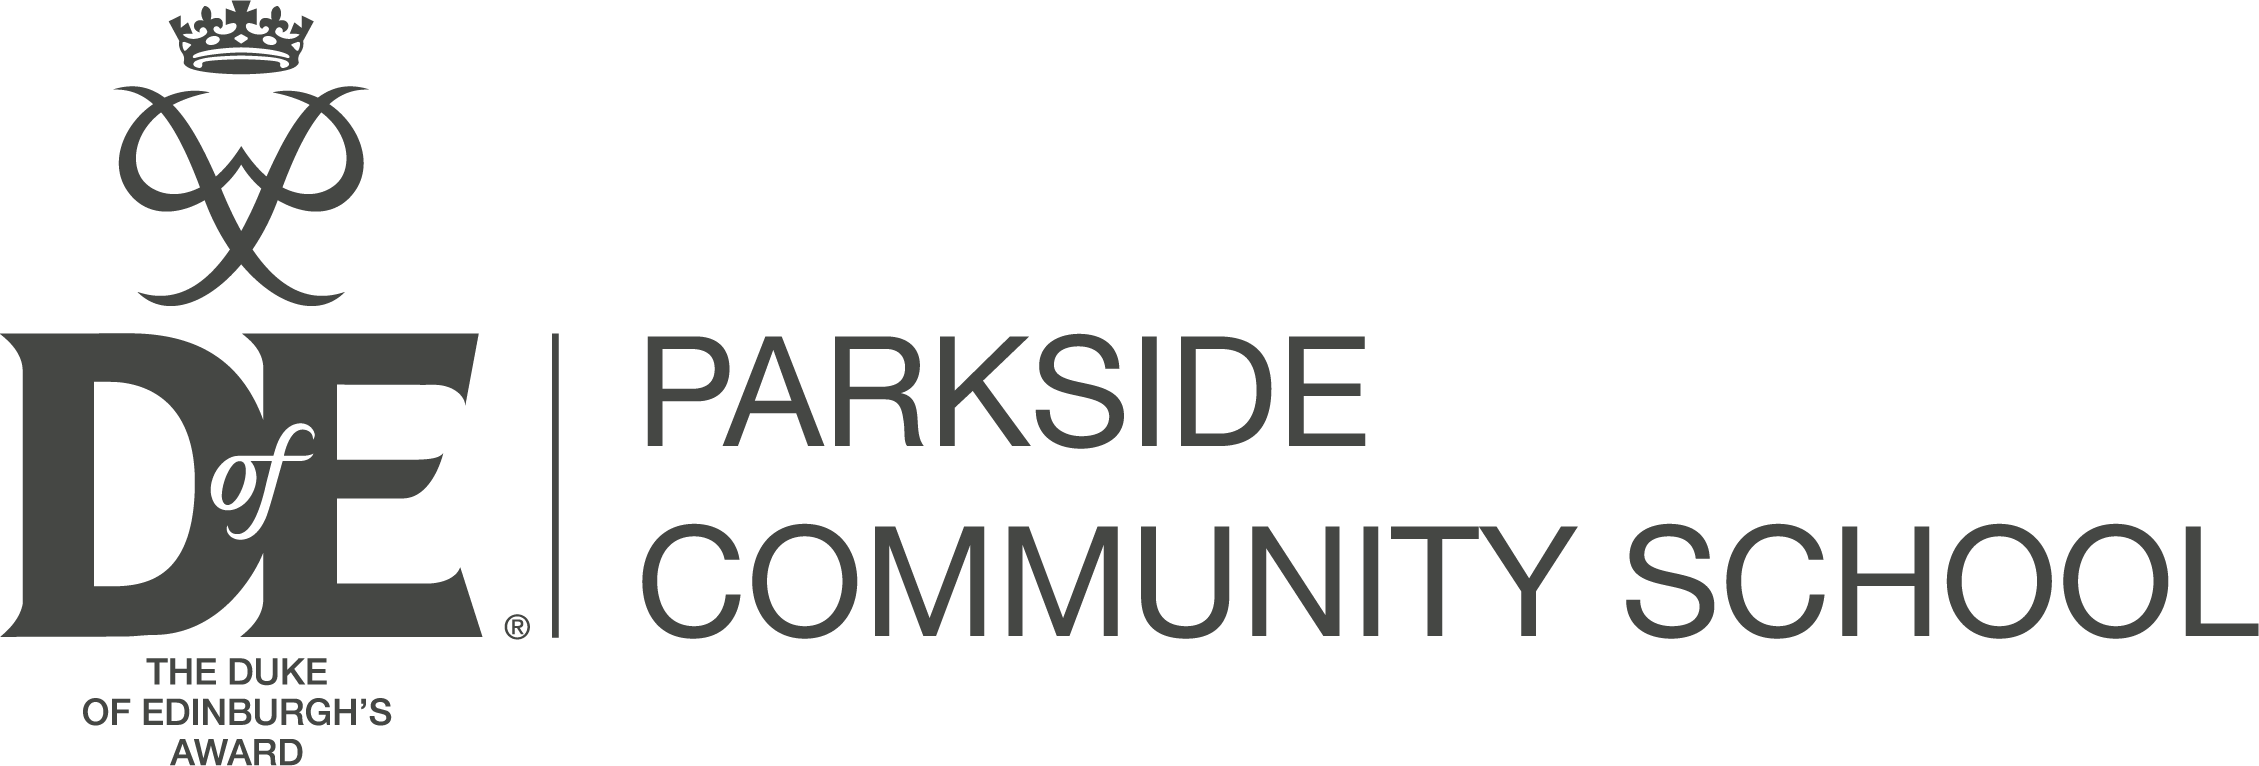 DofE logo Parkside Community School